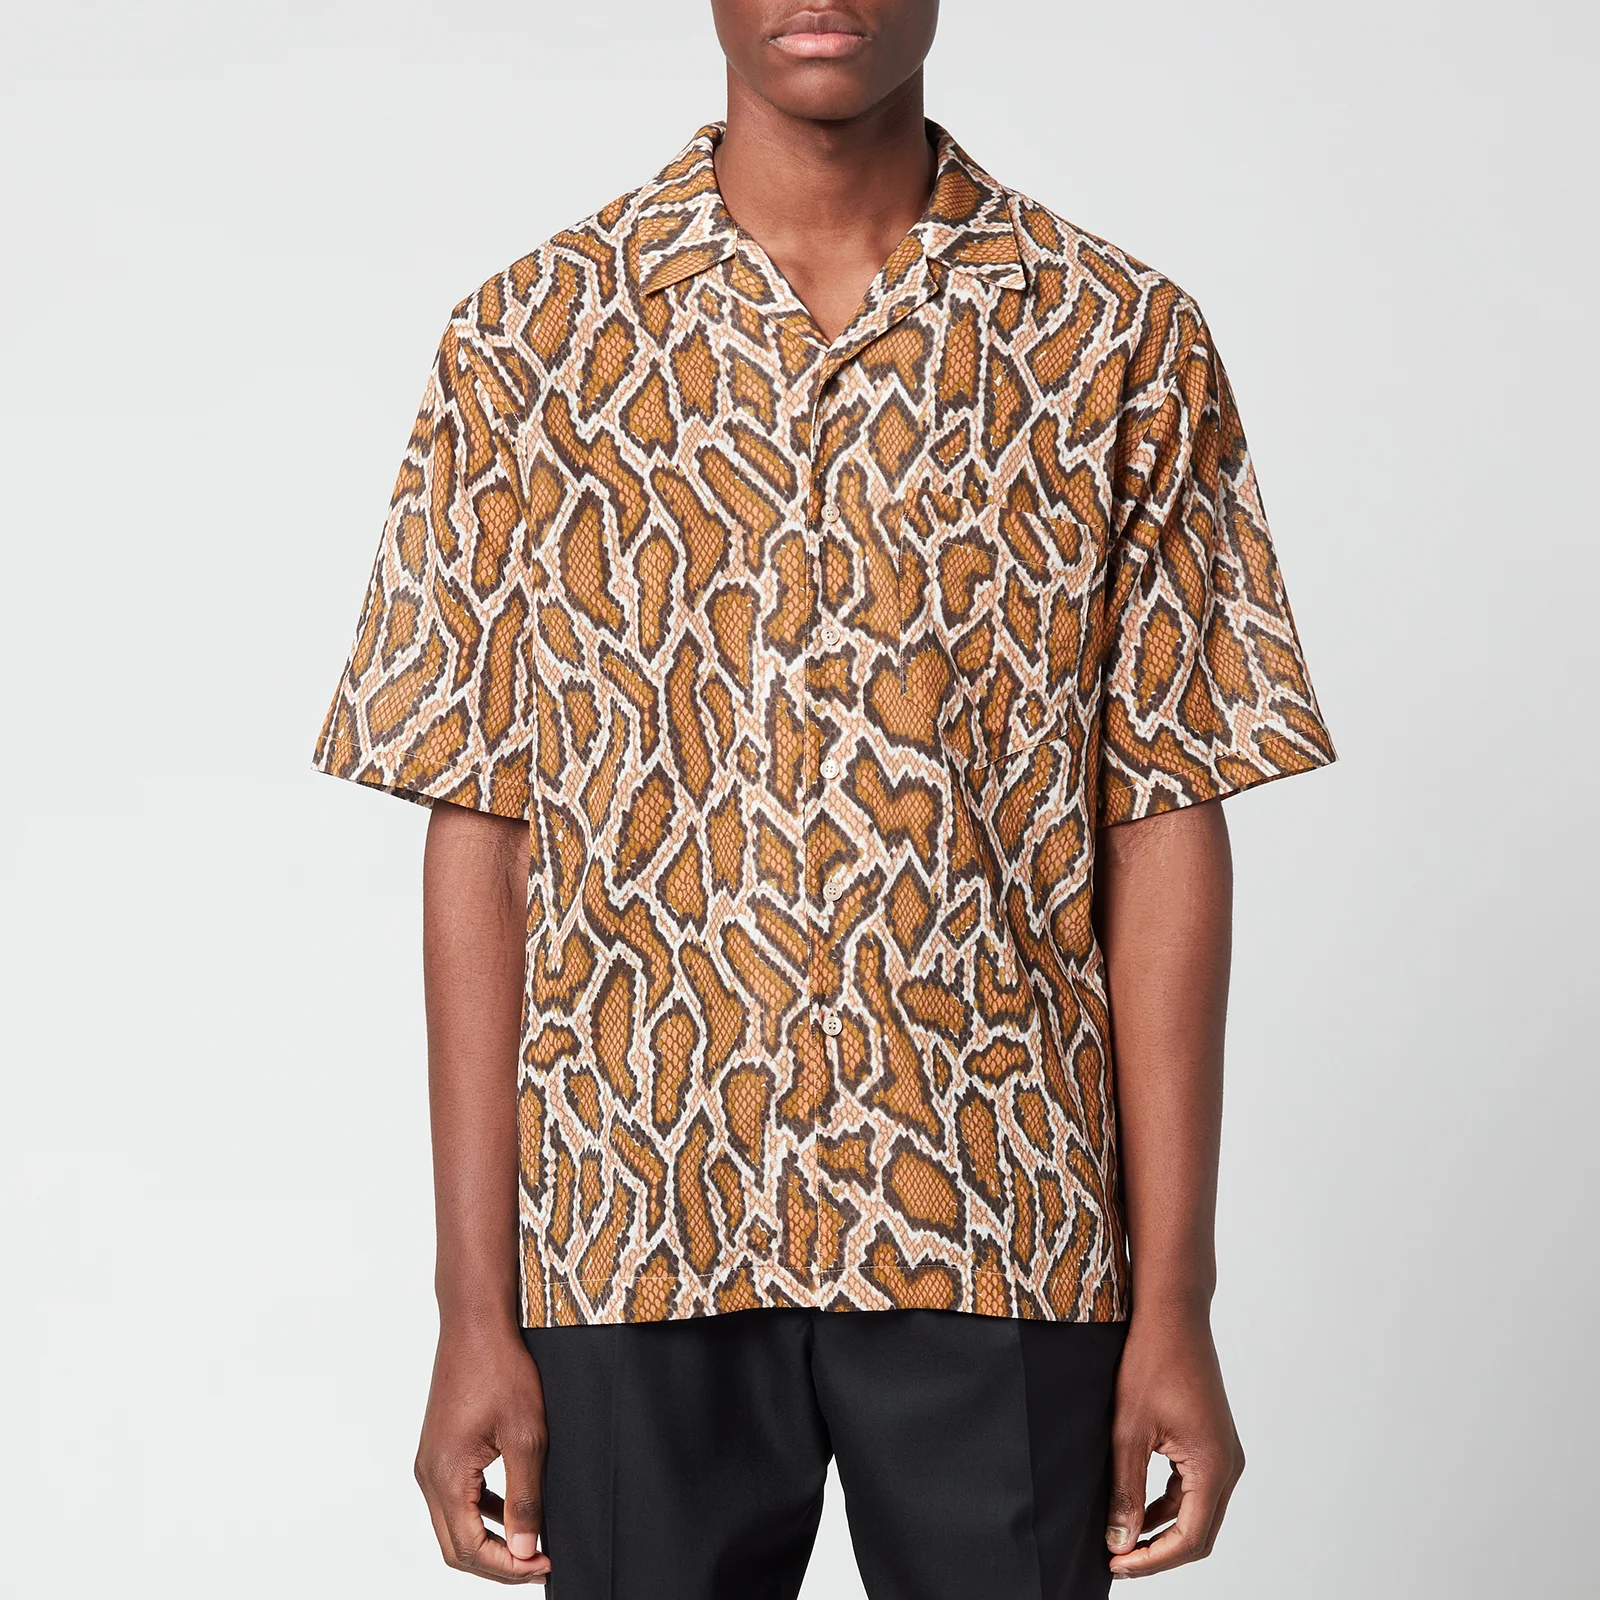 Martine Rose Men's Oversized Hawaiian Shirt - Brown Python Image 1